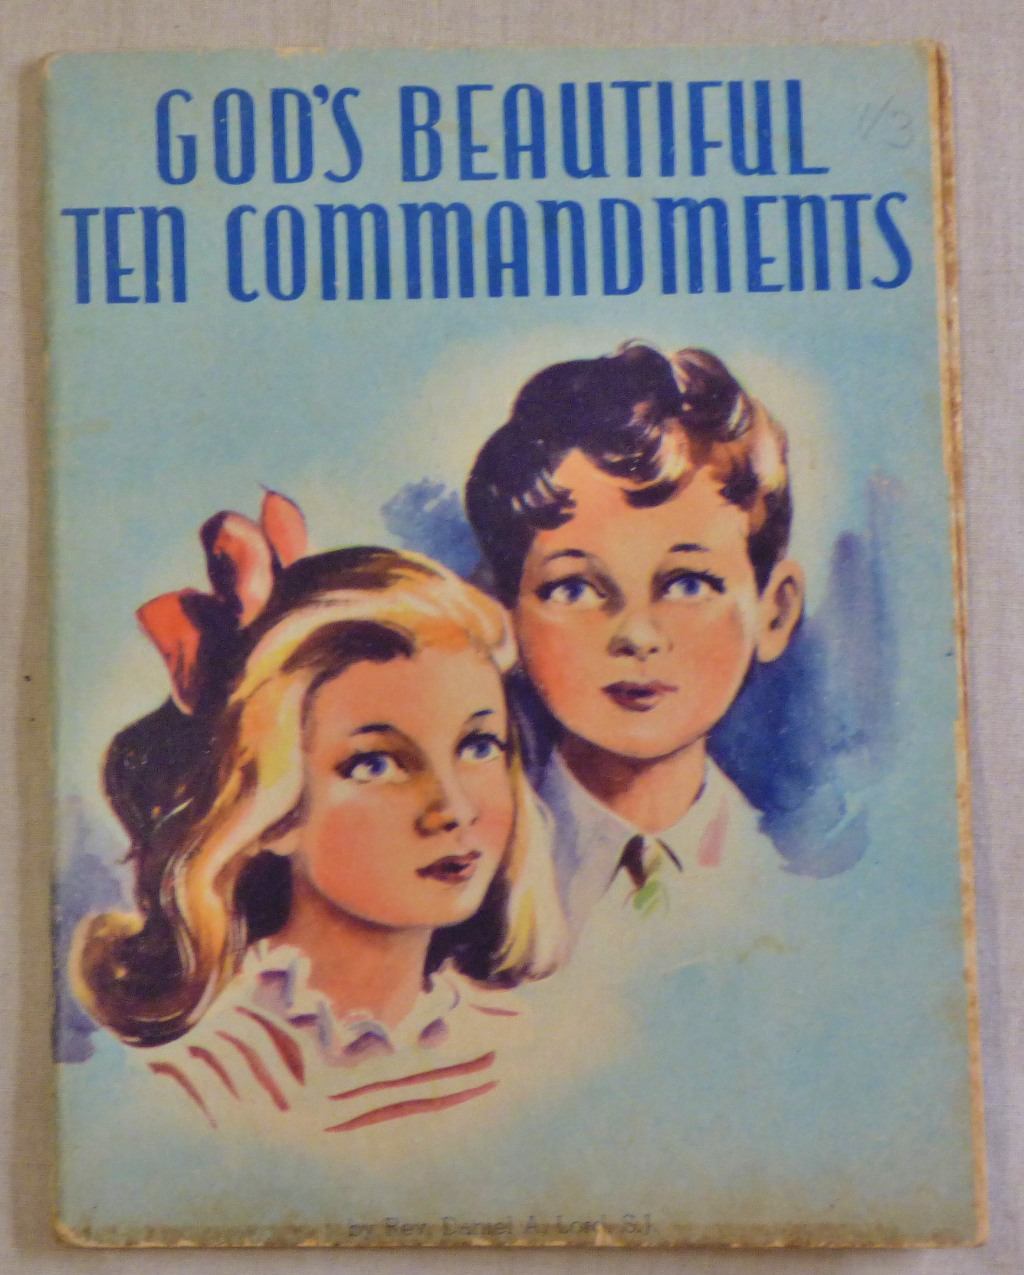 God's Beautiful Ten Commandments by Rev Daniel A Lord illustrated by Ann Elizabeth 1944 pub New - Image 2 of 2